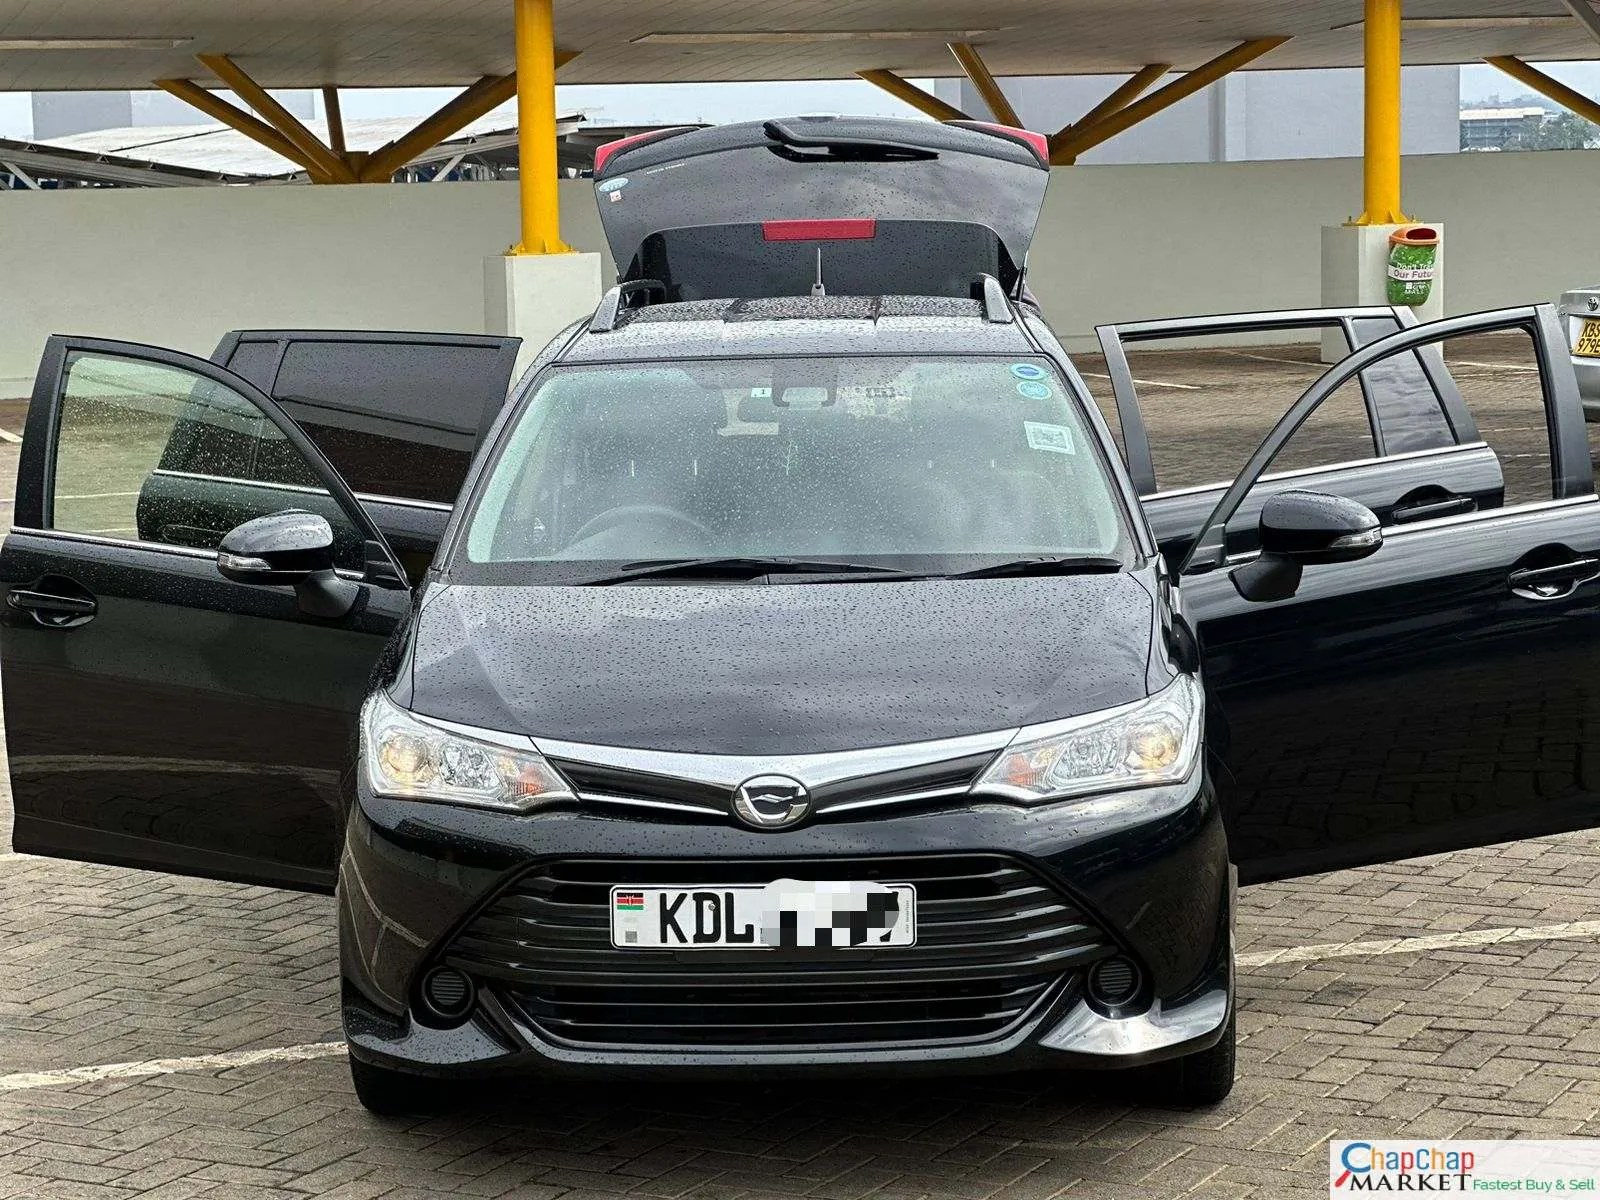 New Toyota for sale in kenya installments on offer